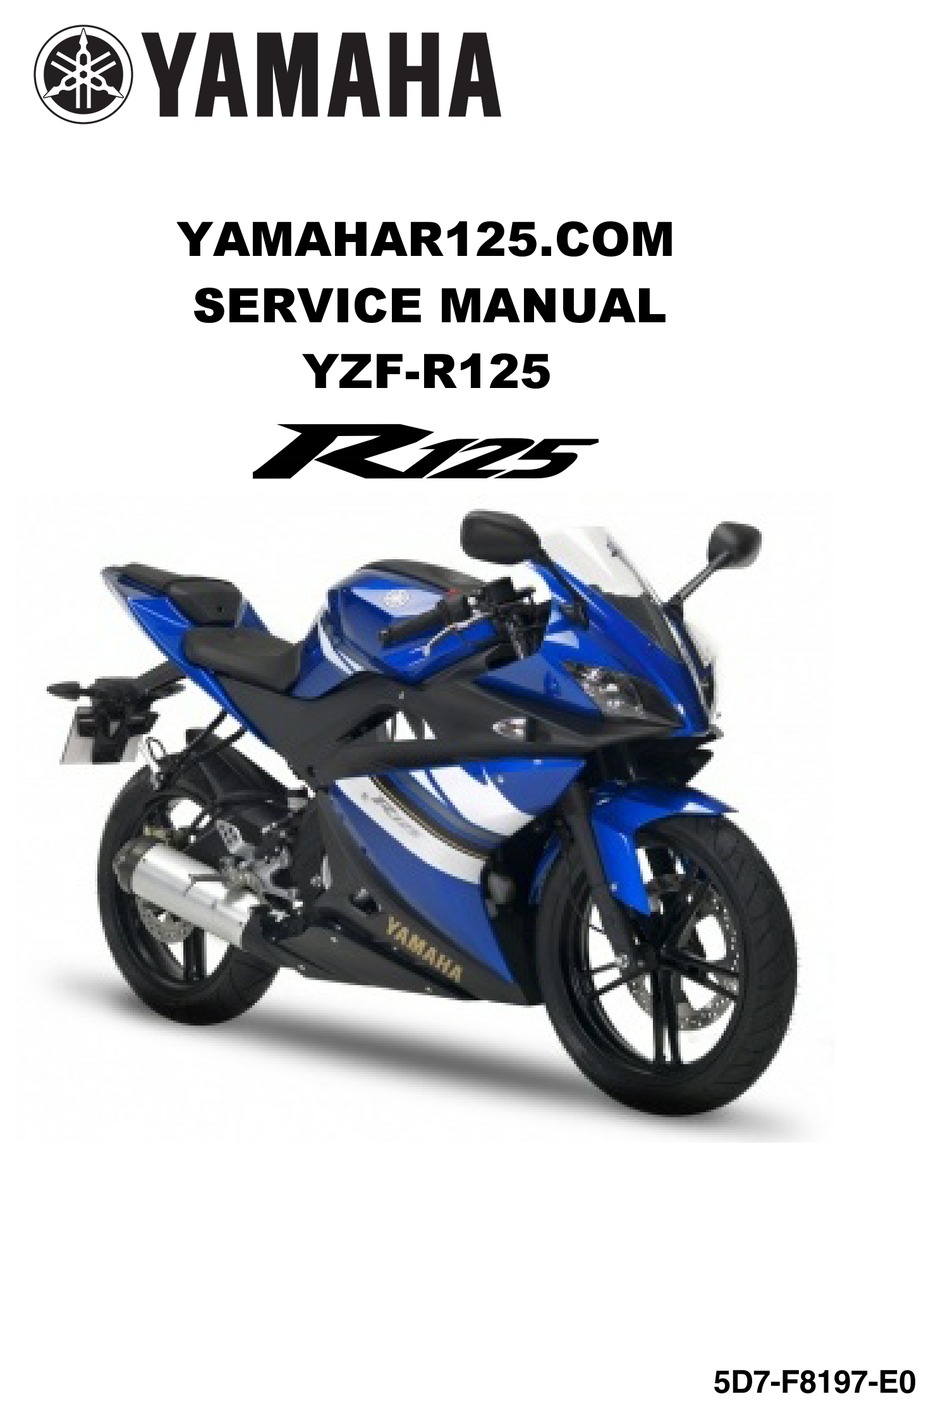 yamaha yp 125 service manual